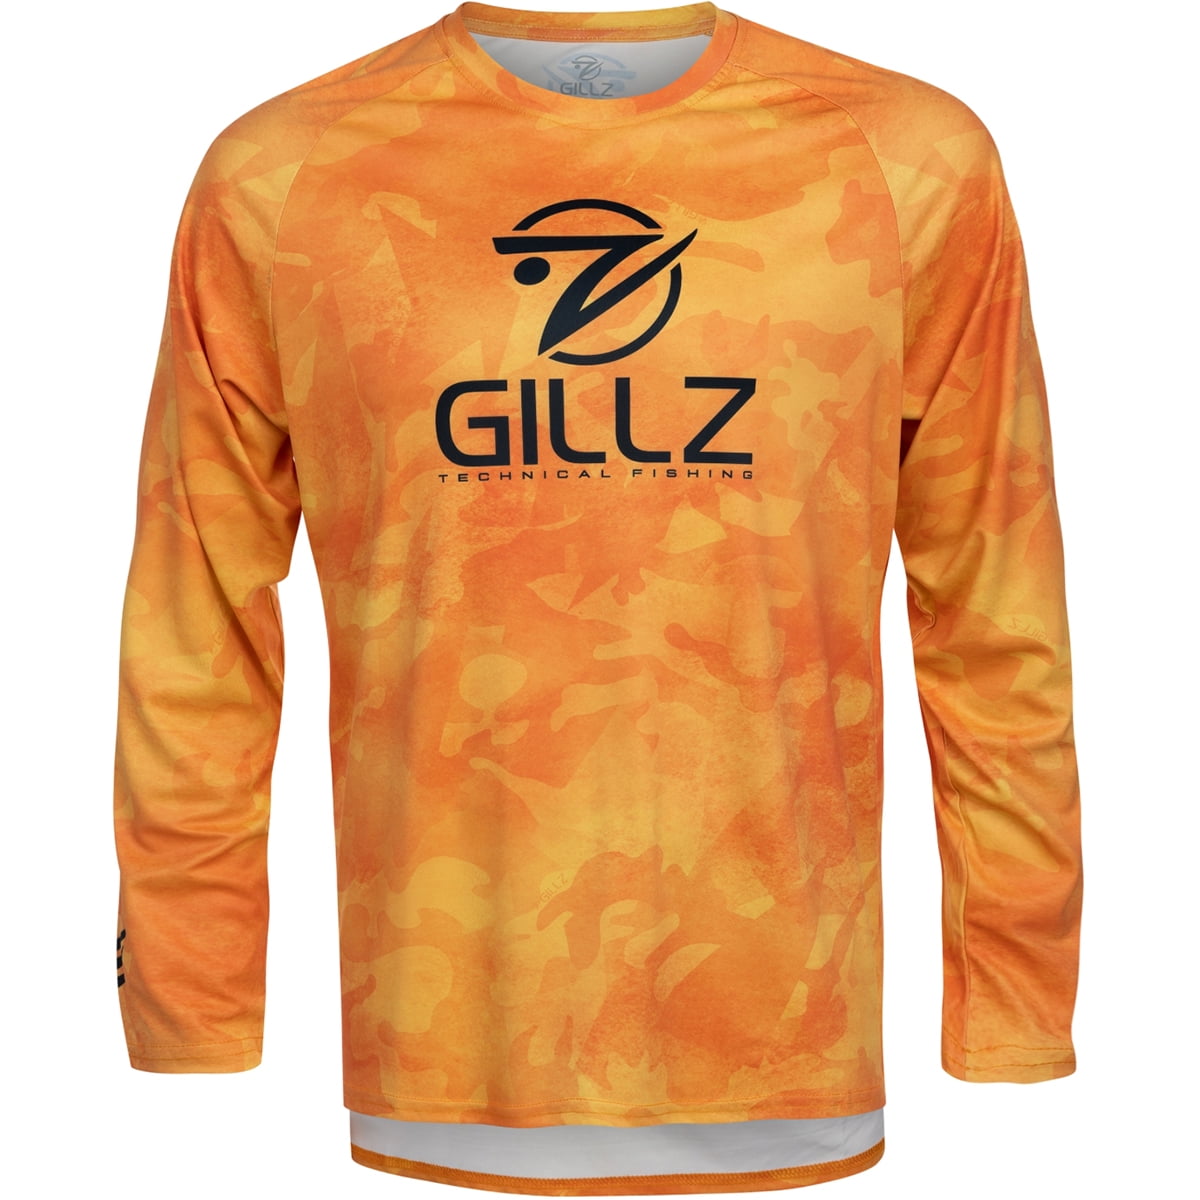 Gillz Contender Series Burnt UV Long Sleeve T-Shirt - Large - Sun Orange